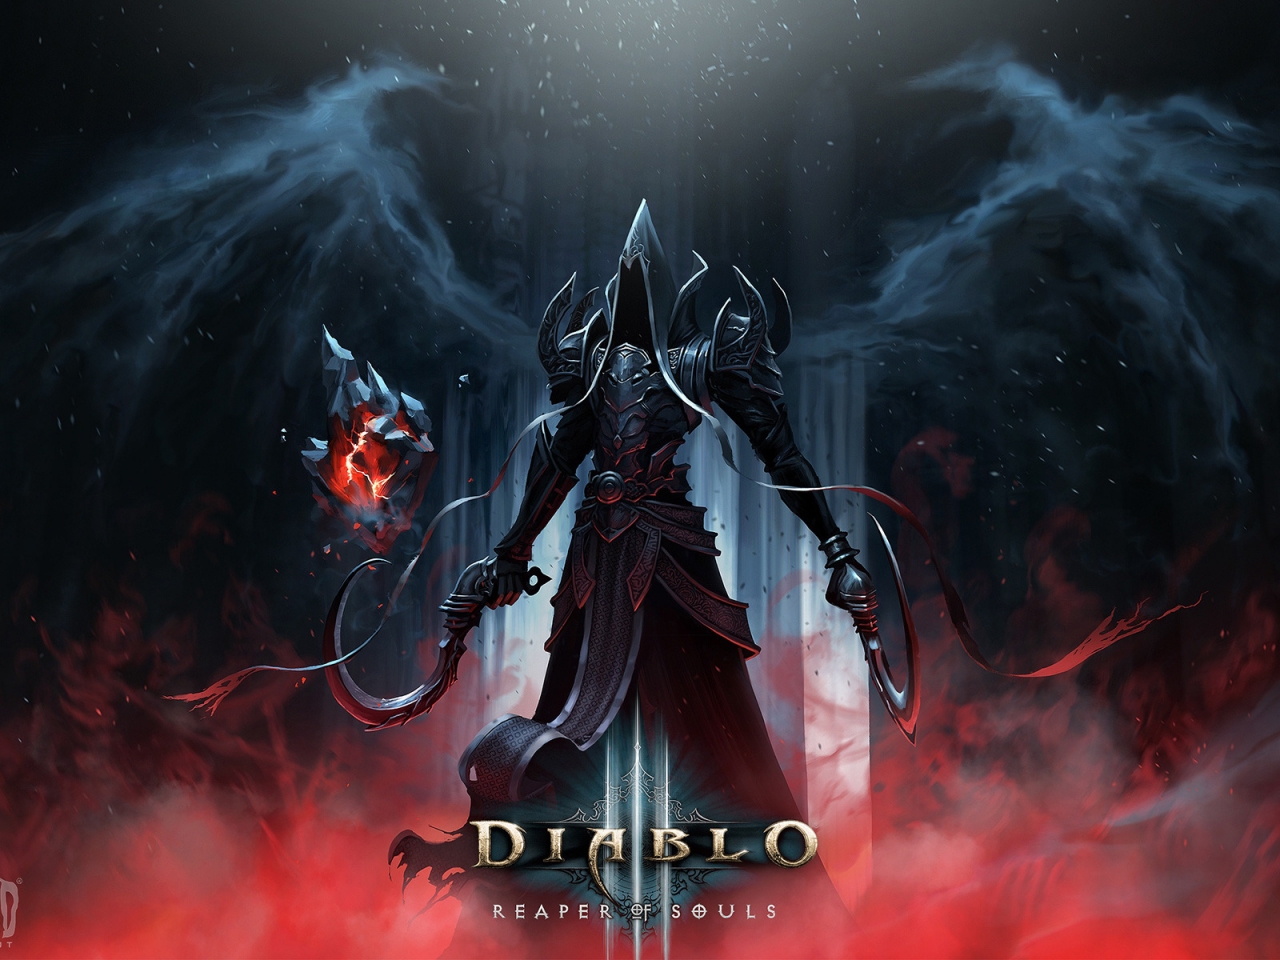 Diablo 3 Reaper of Souls for 1280 x 960 resolution